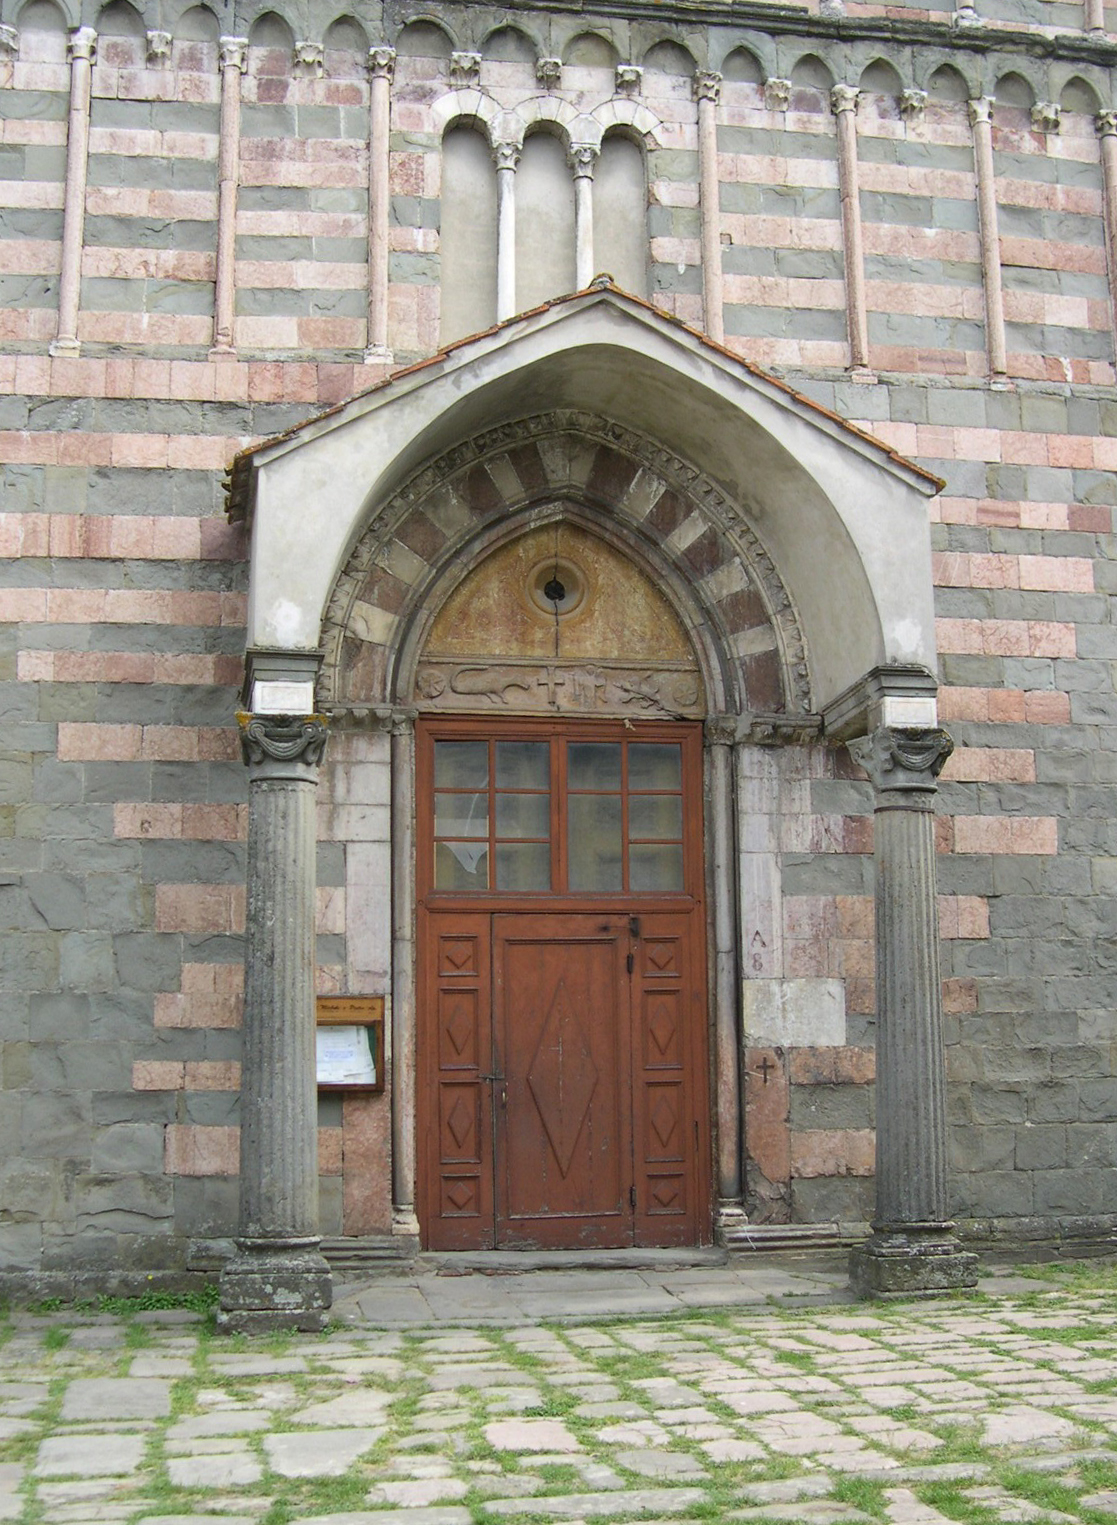 The entrance portal of the church